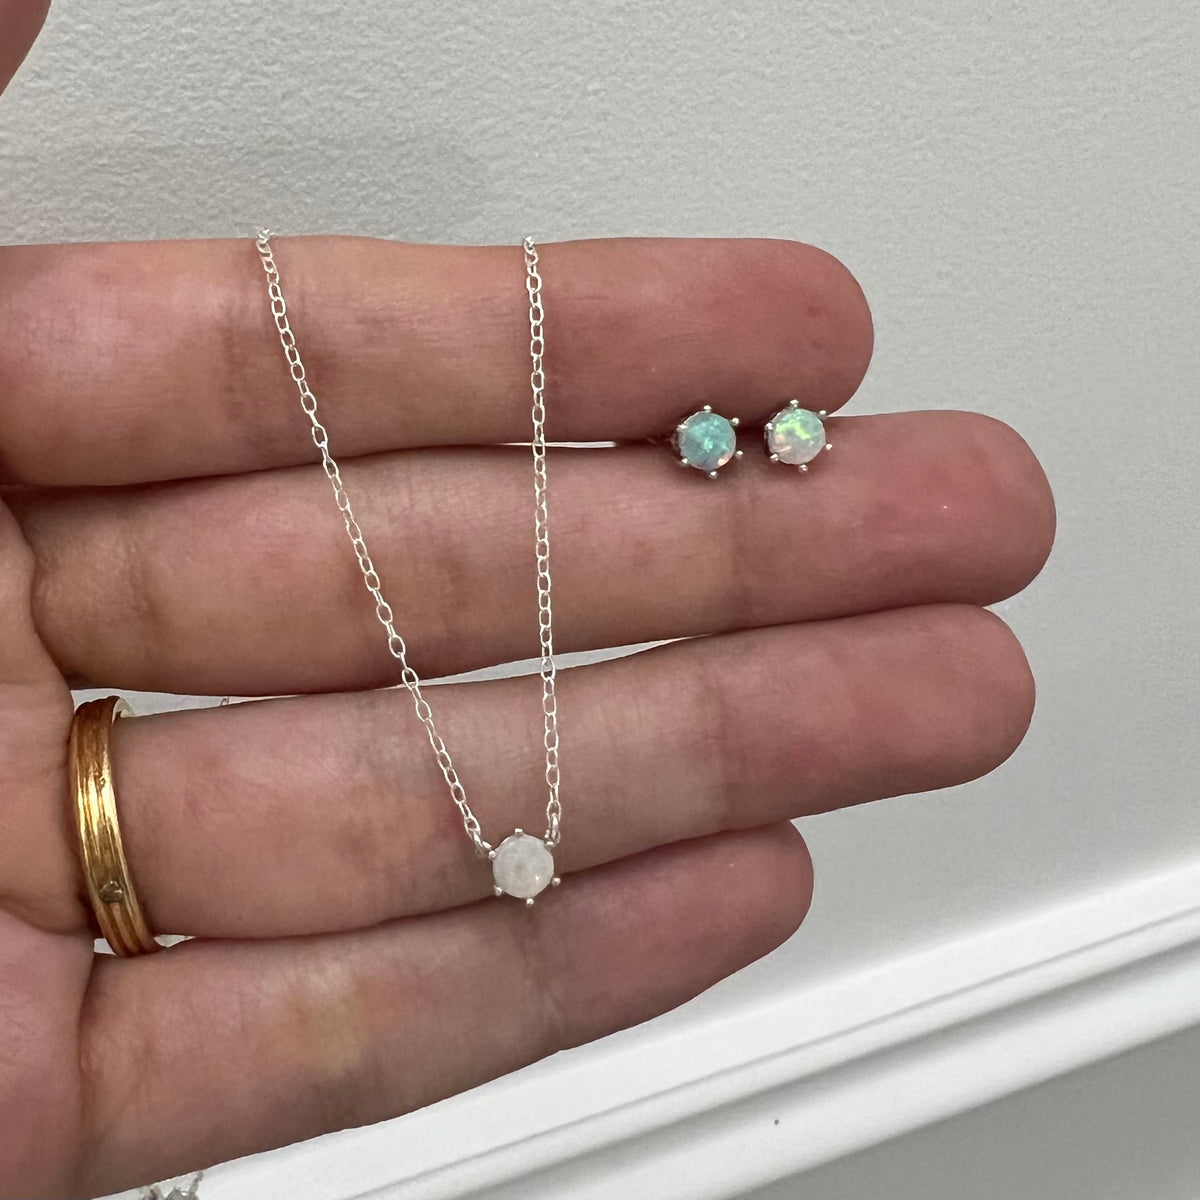 Earrings + Necklace Bundle ($100 value)